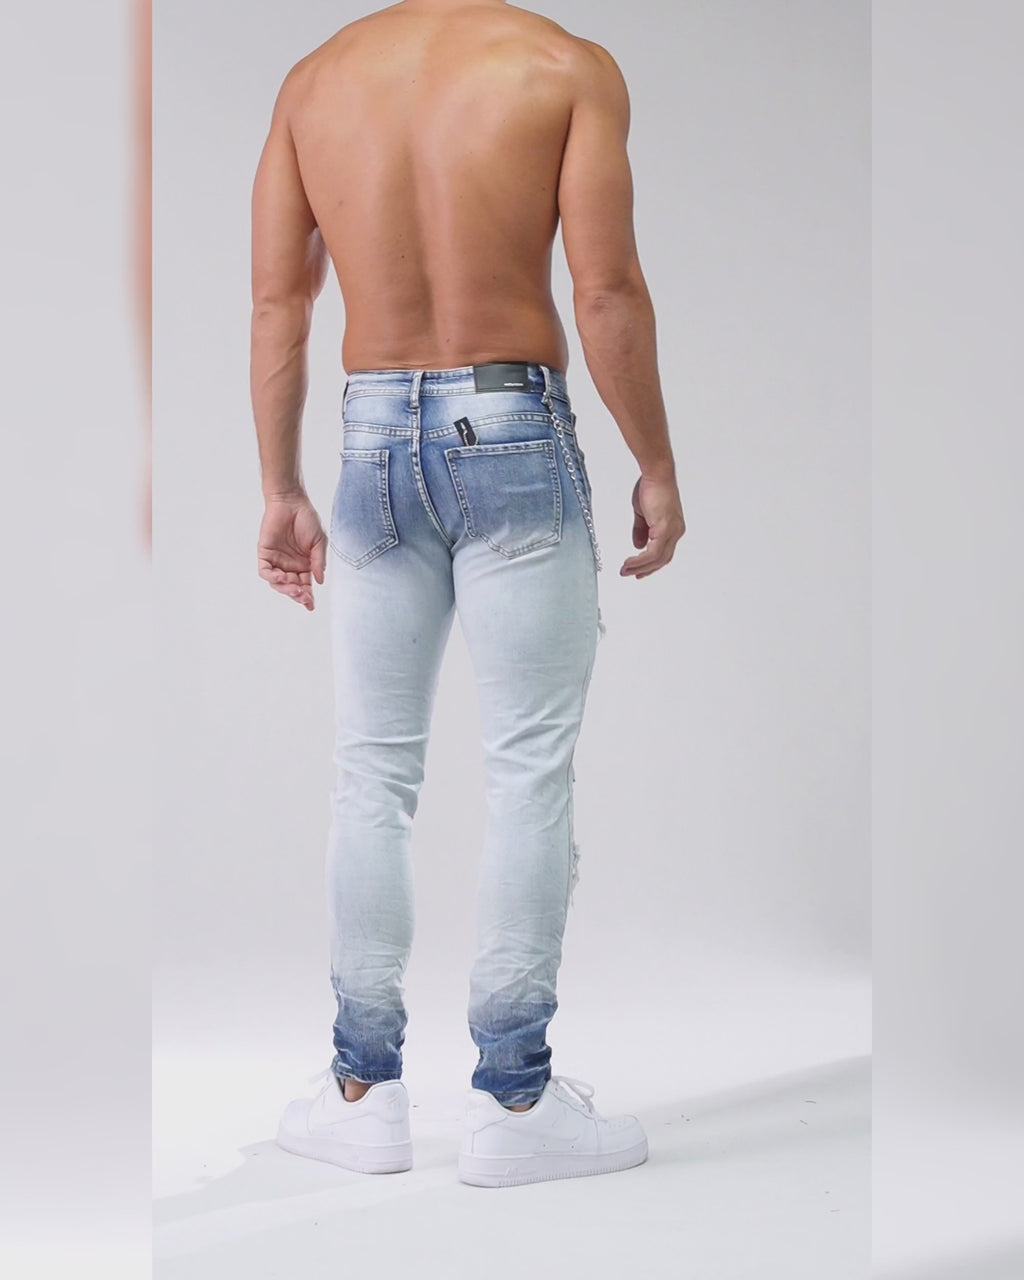 LOGEQI Slim Fit Light Wash Blue Ripped Jeans